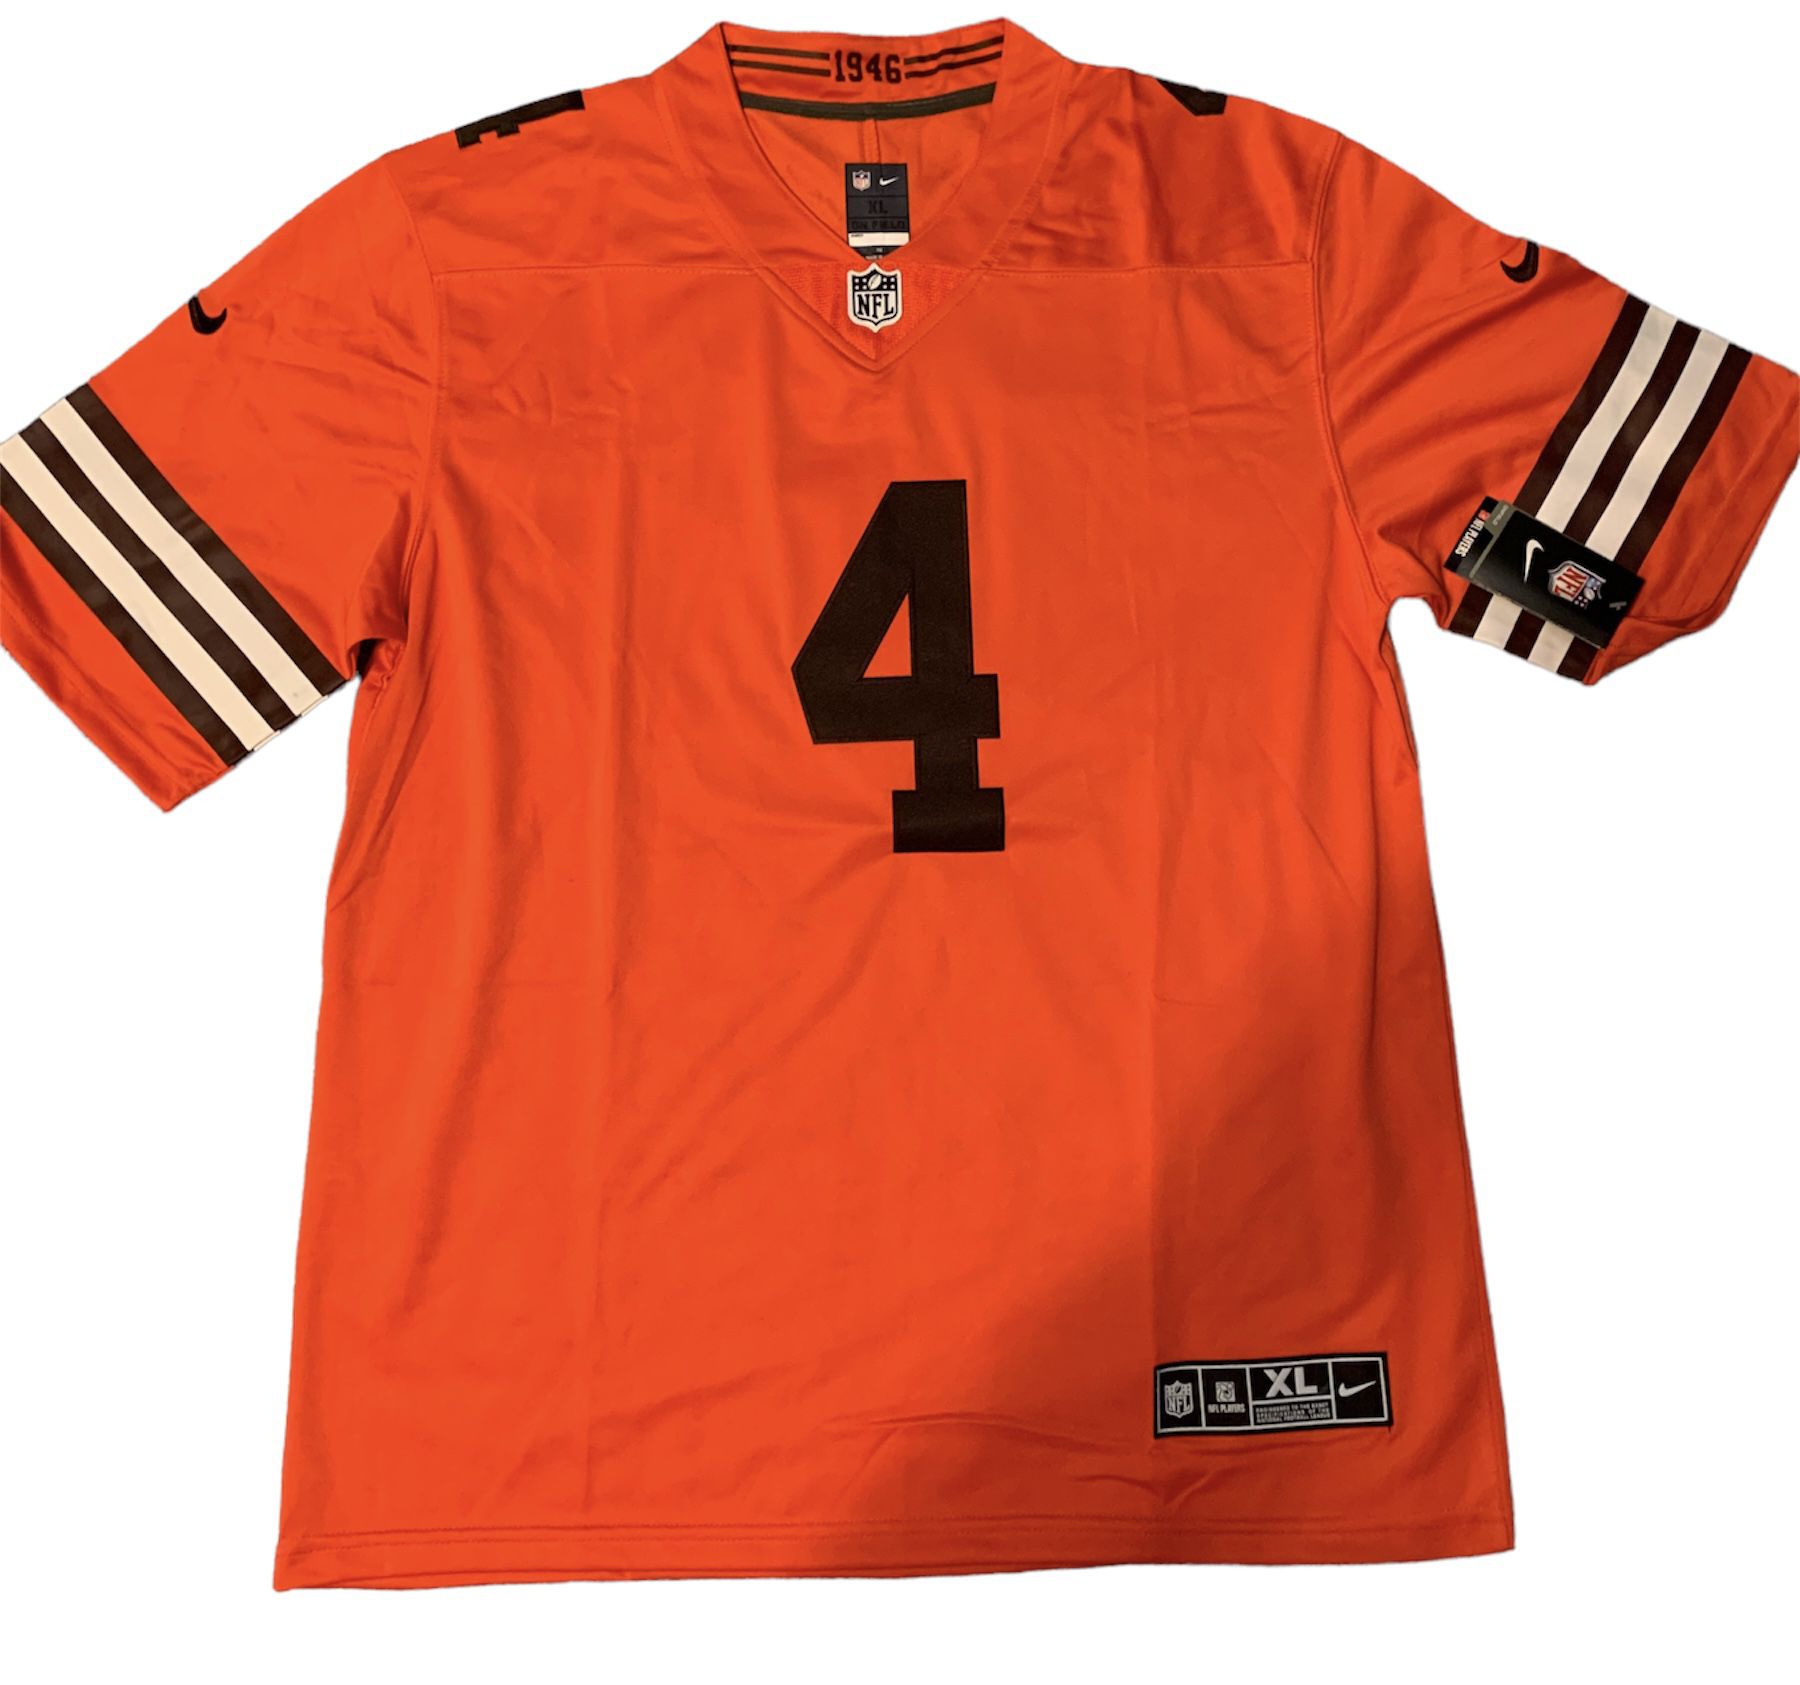 New Stitched Deshaun Watson Cleveland Browns Jersey Size Medium, Large  And XL